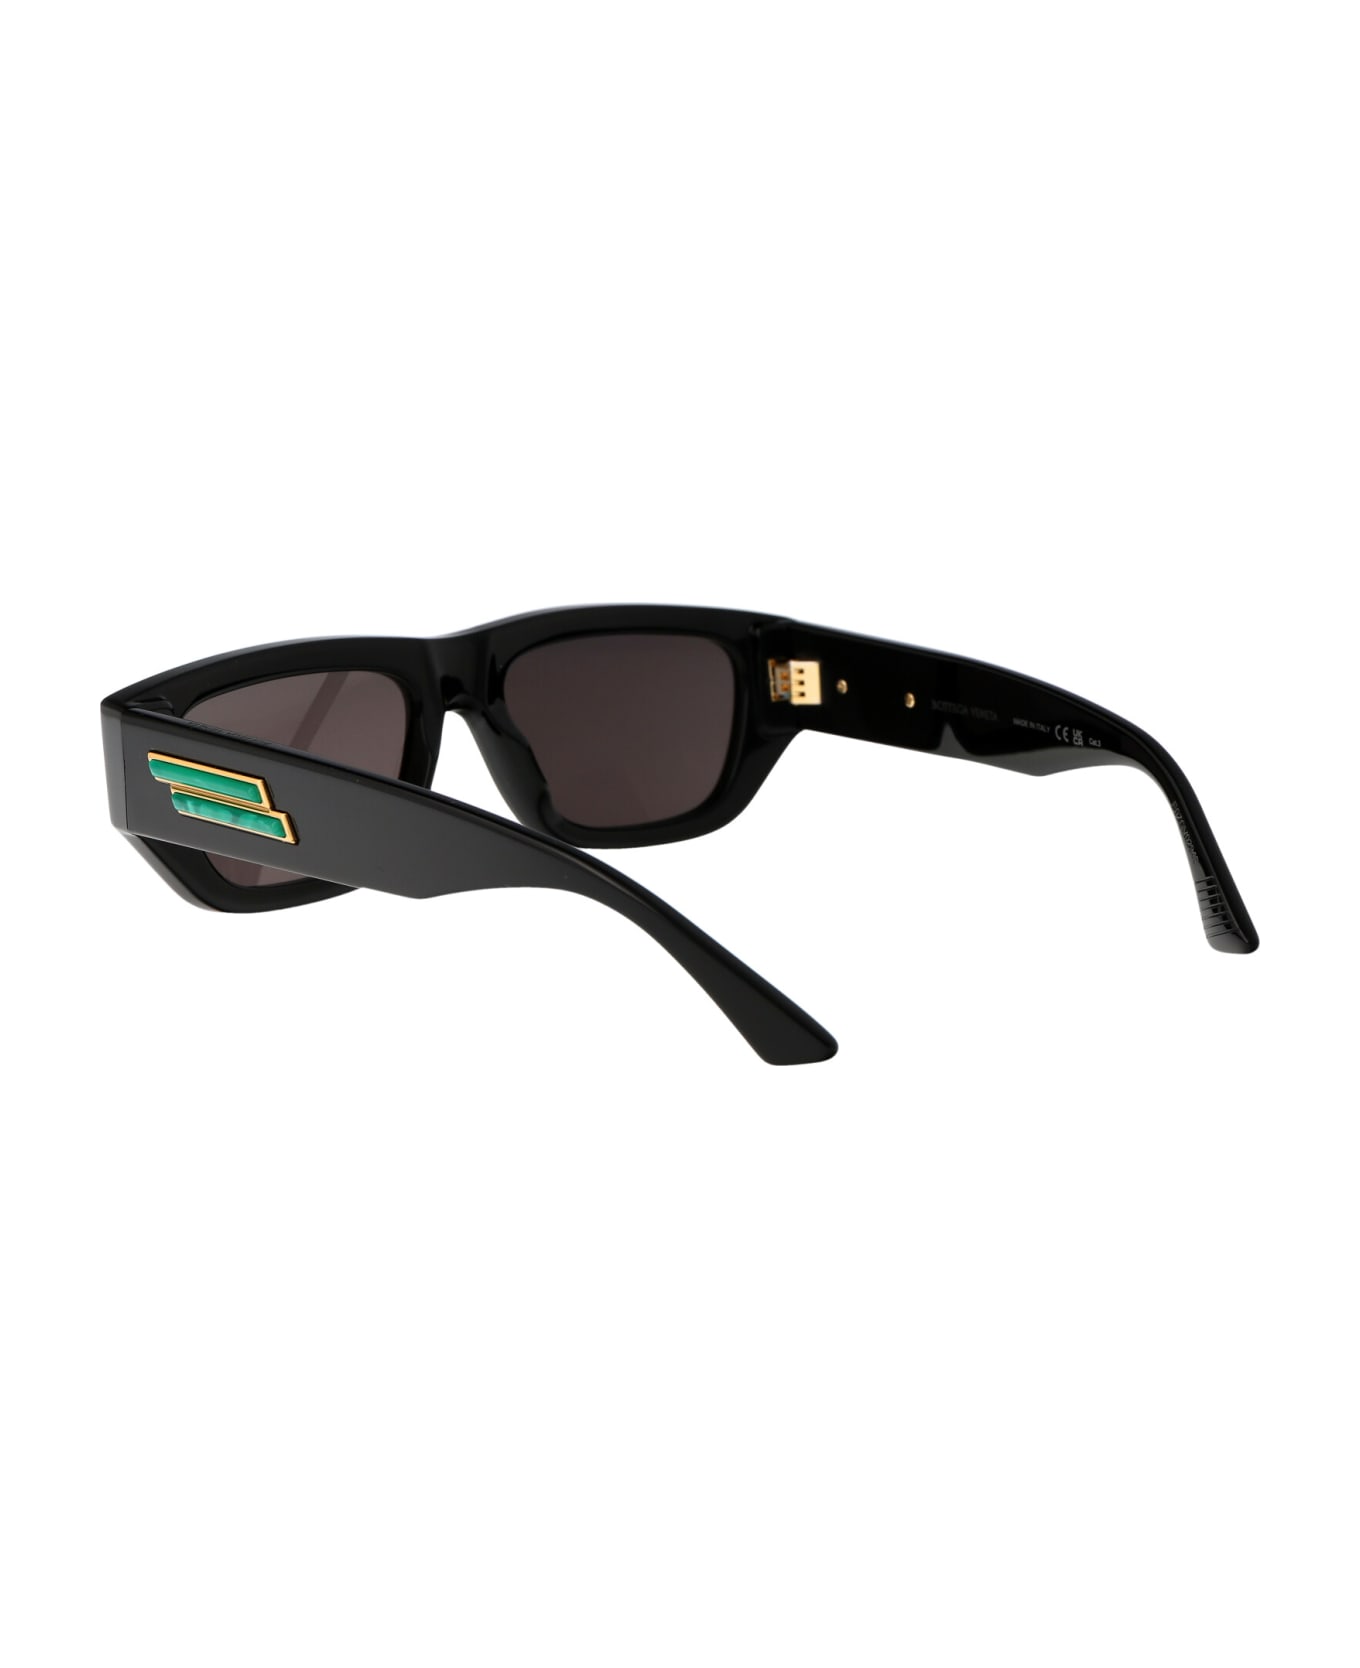 Bottega Veneta Eyewear Bv1252s Sunglasses - 001 BLACK BLACK GREY